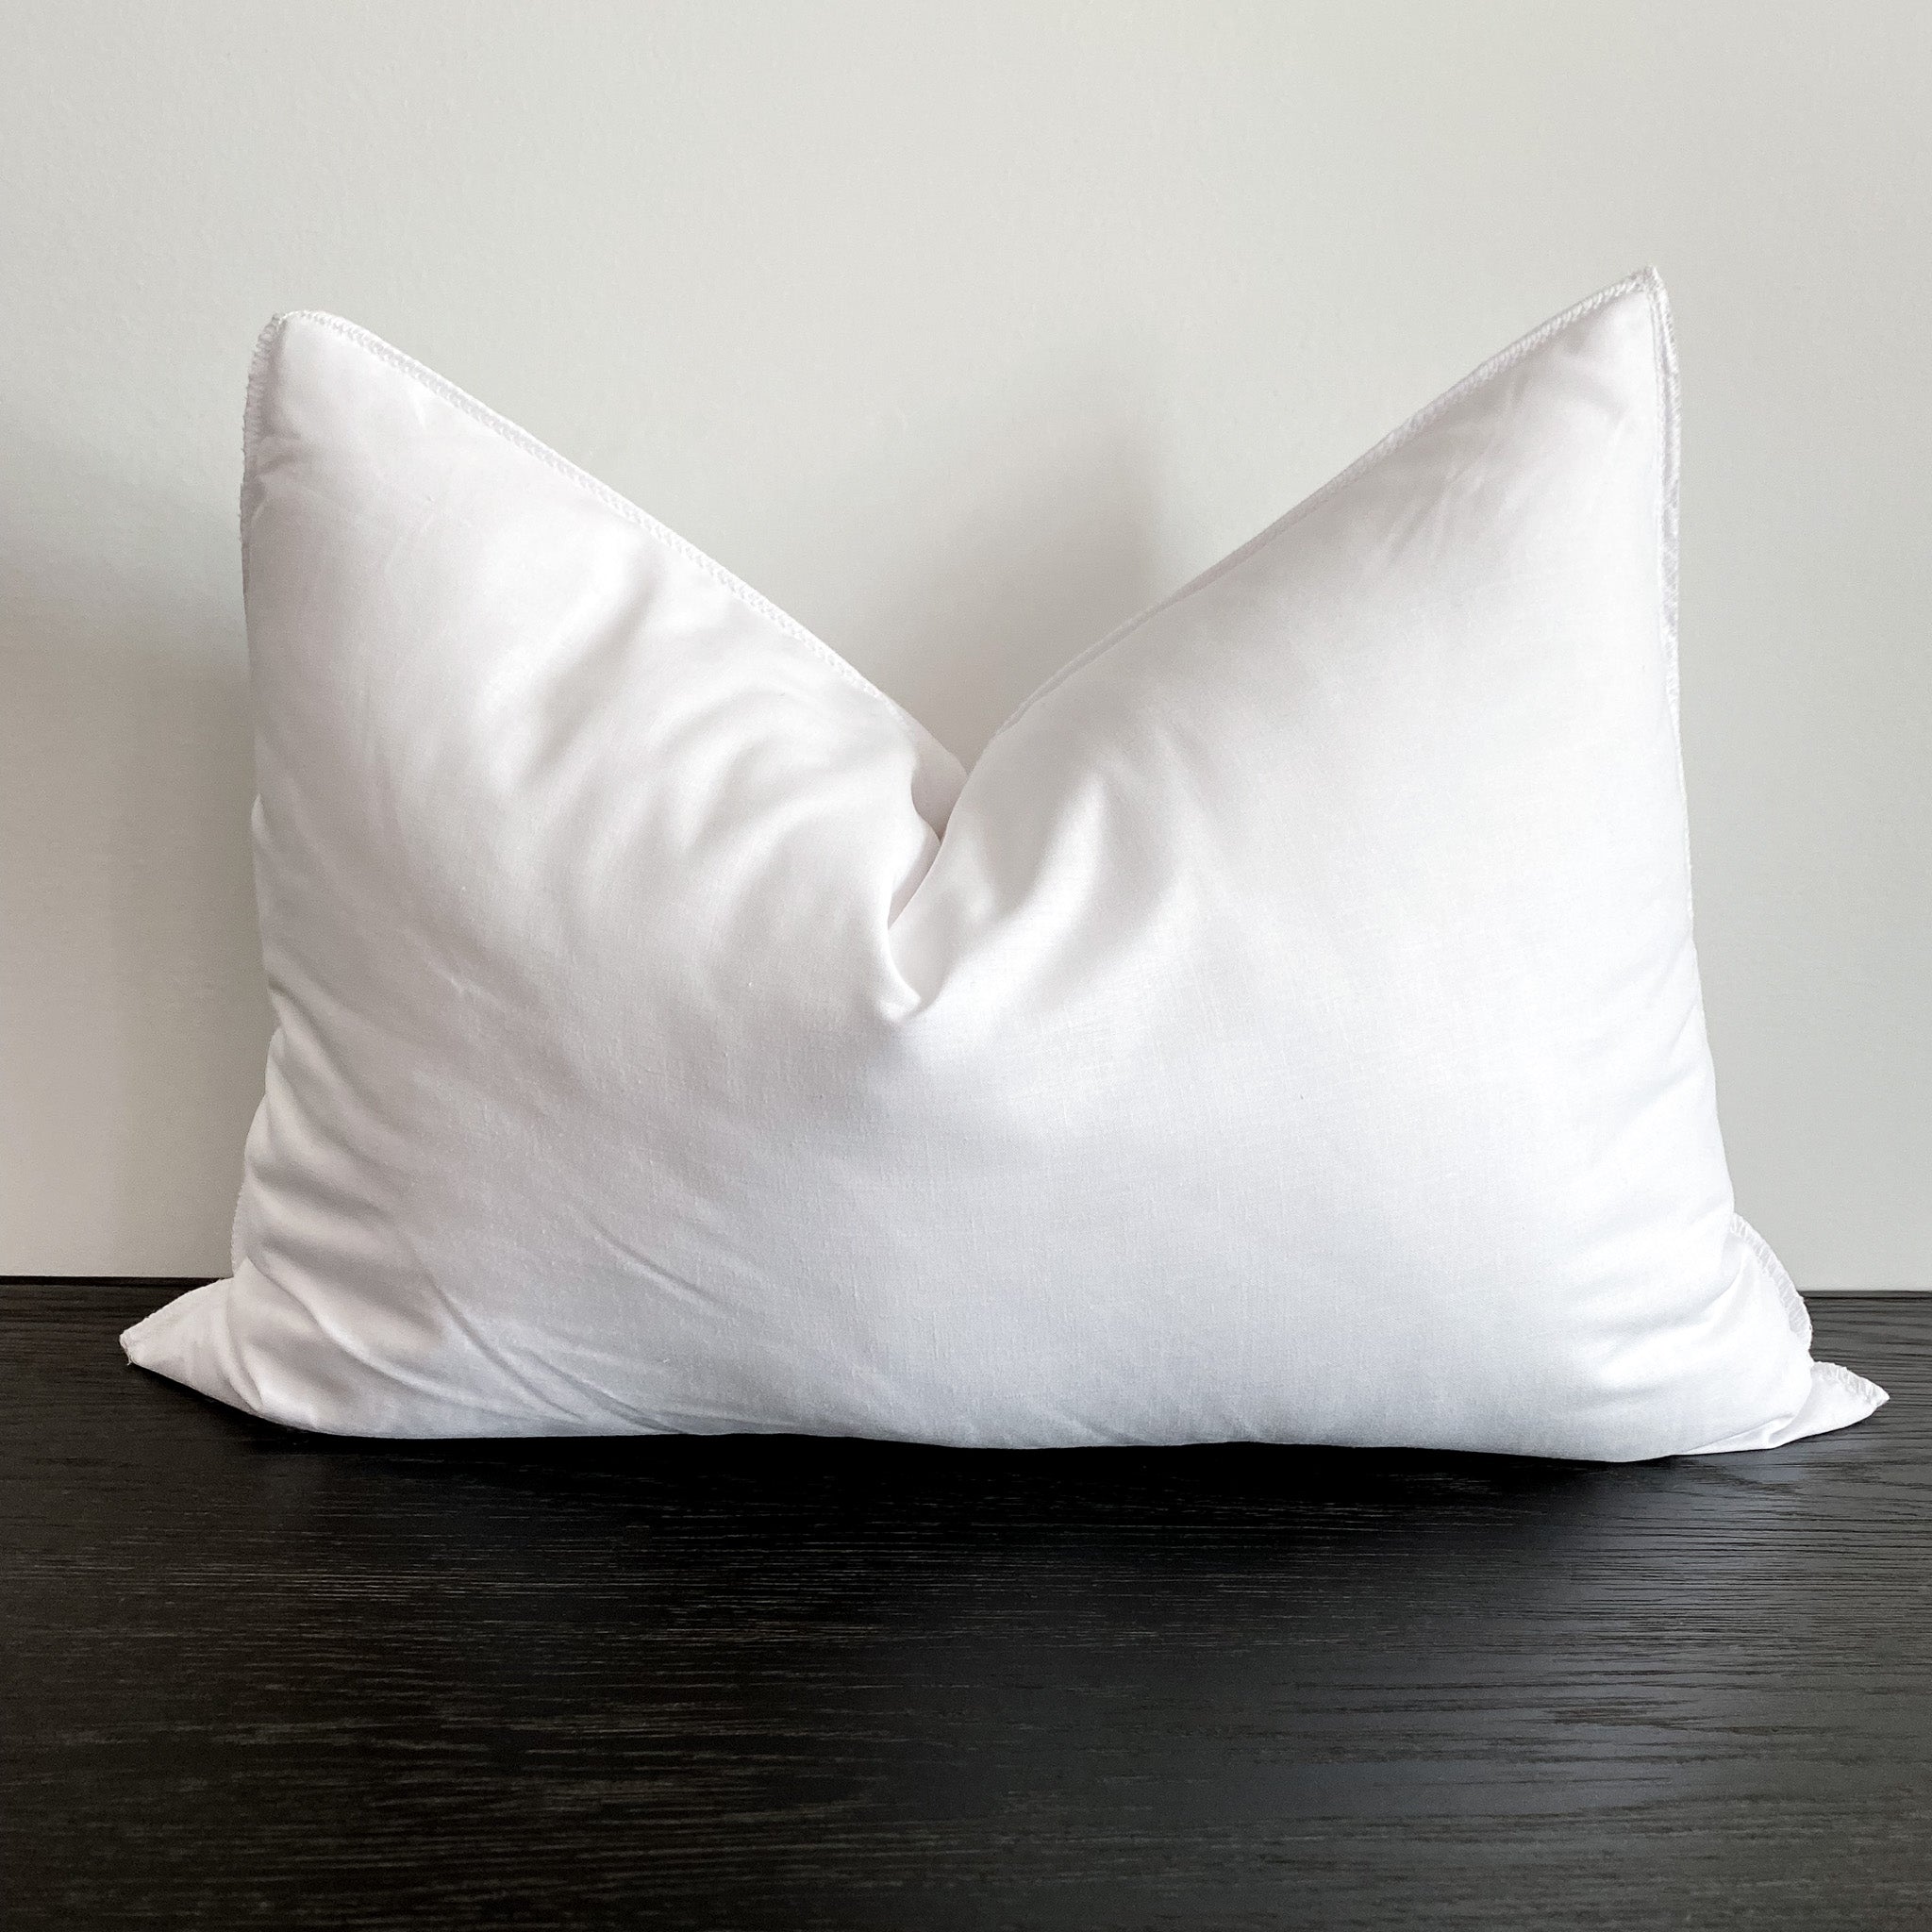 Pillow Insert Set of 4 18 x18 Down Alternative , Decorative